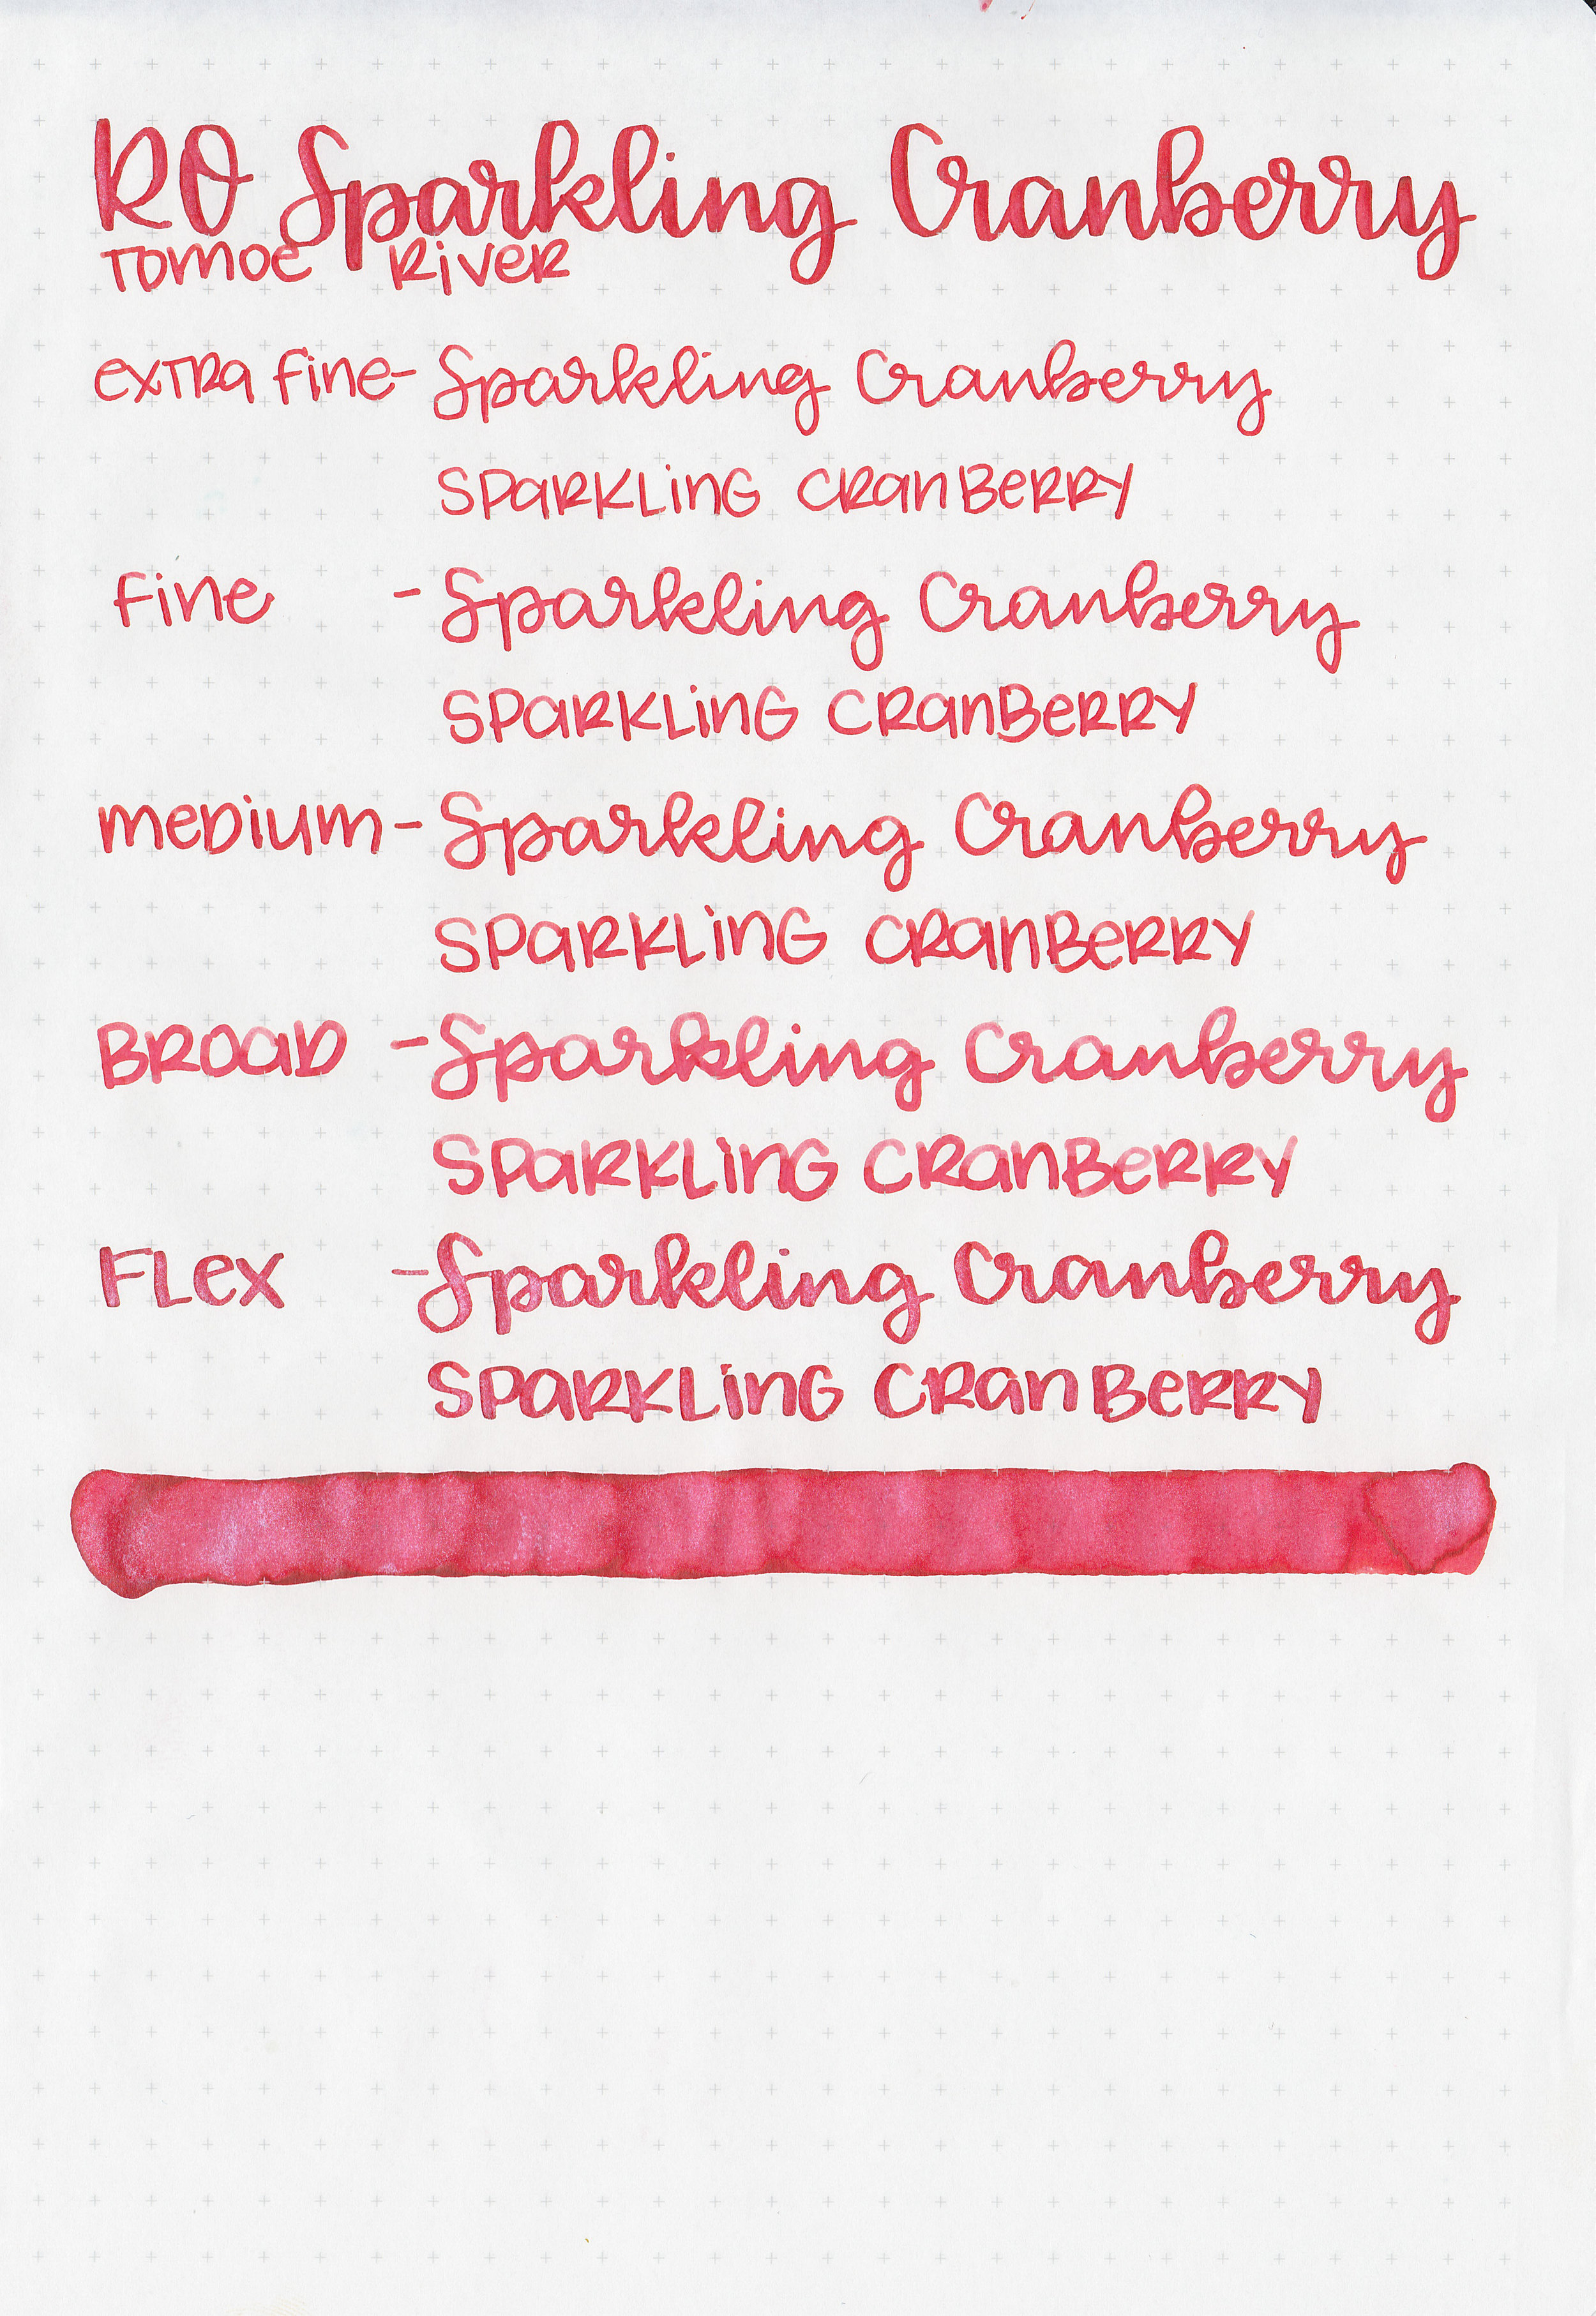 ro-sparkling-cranberry-6.jpg